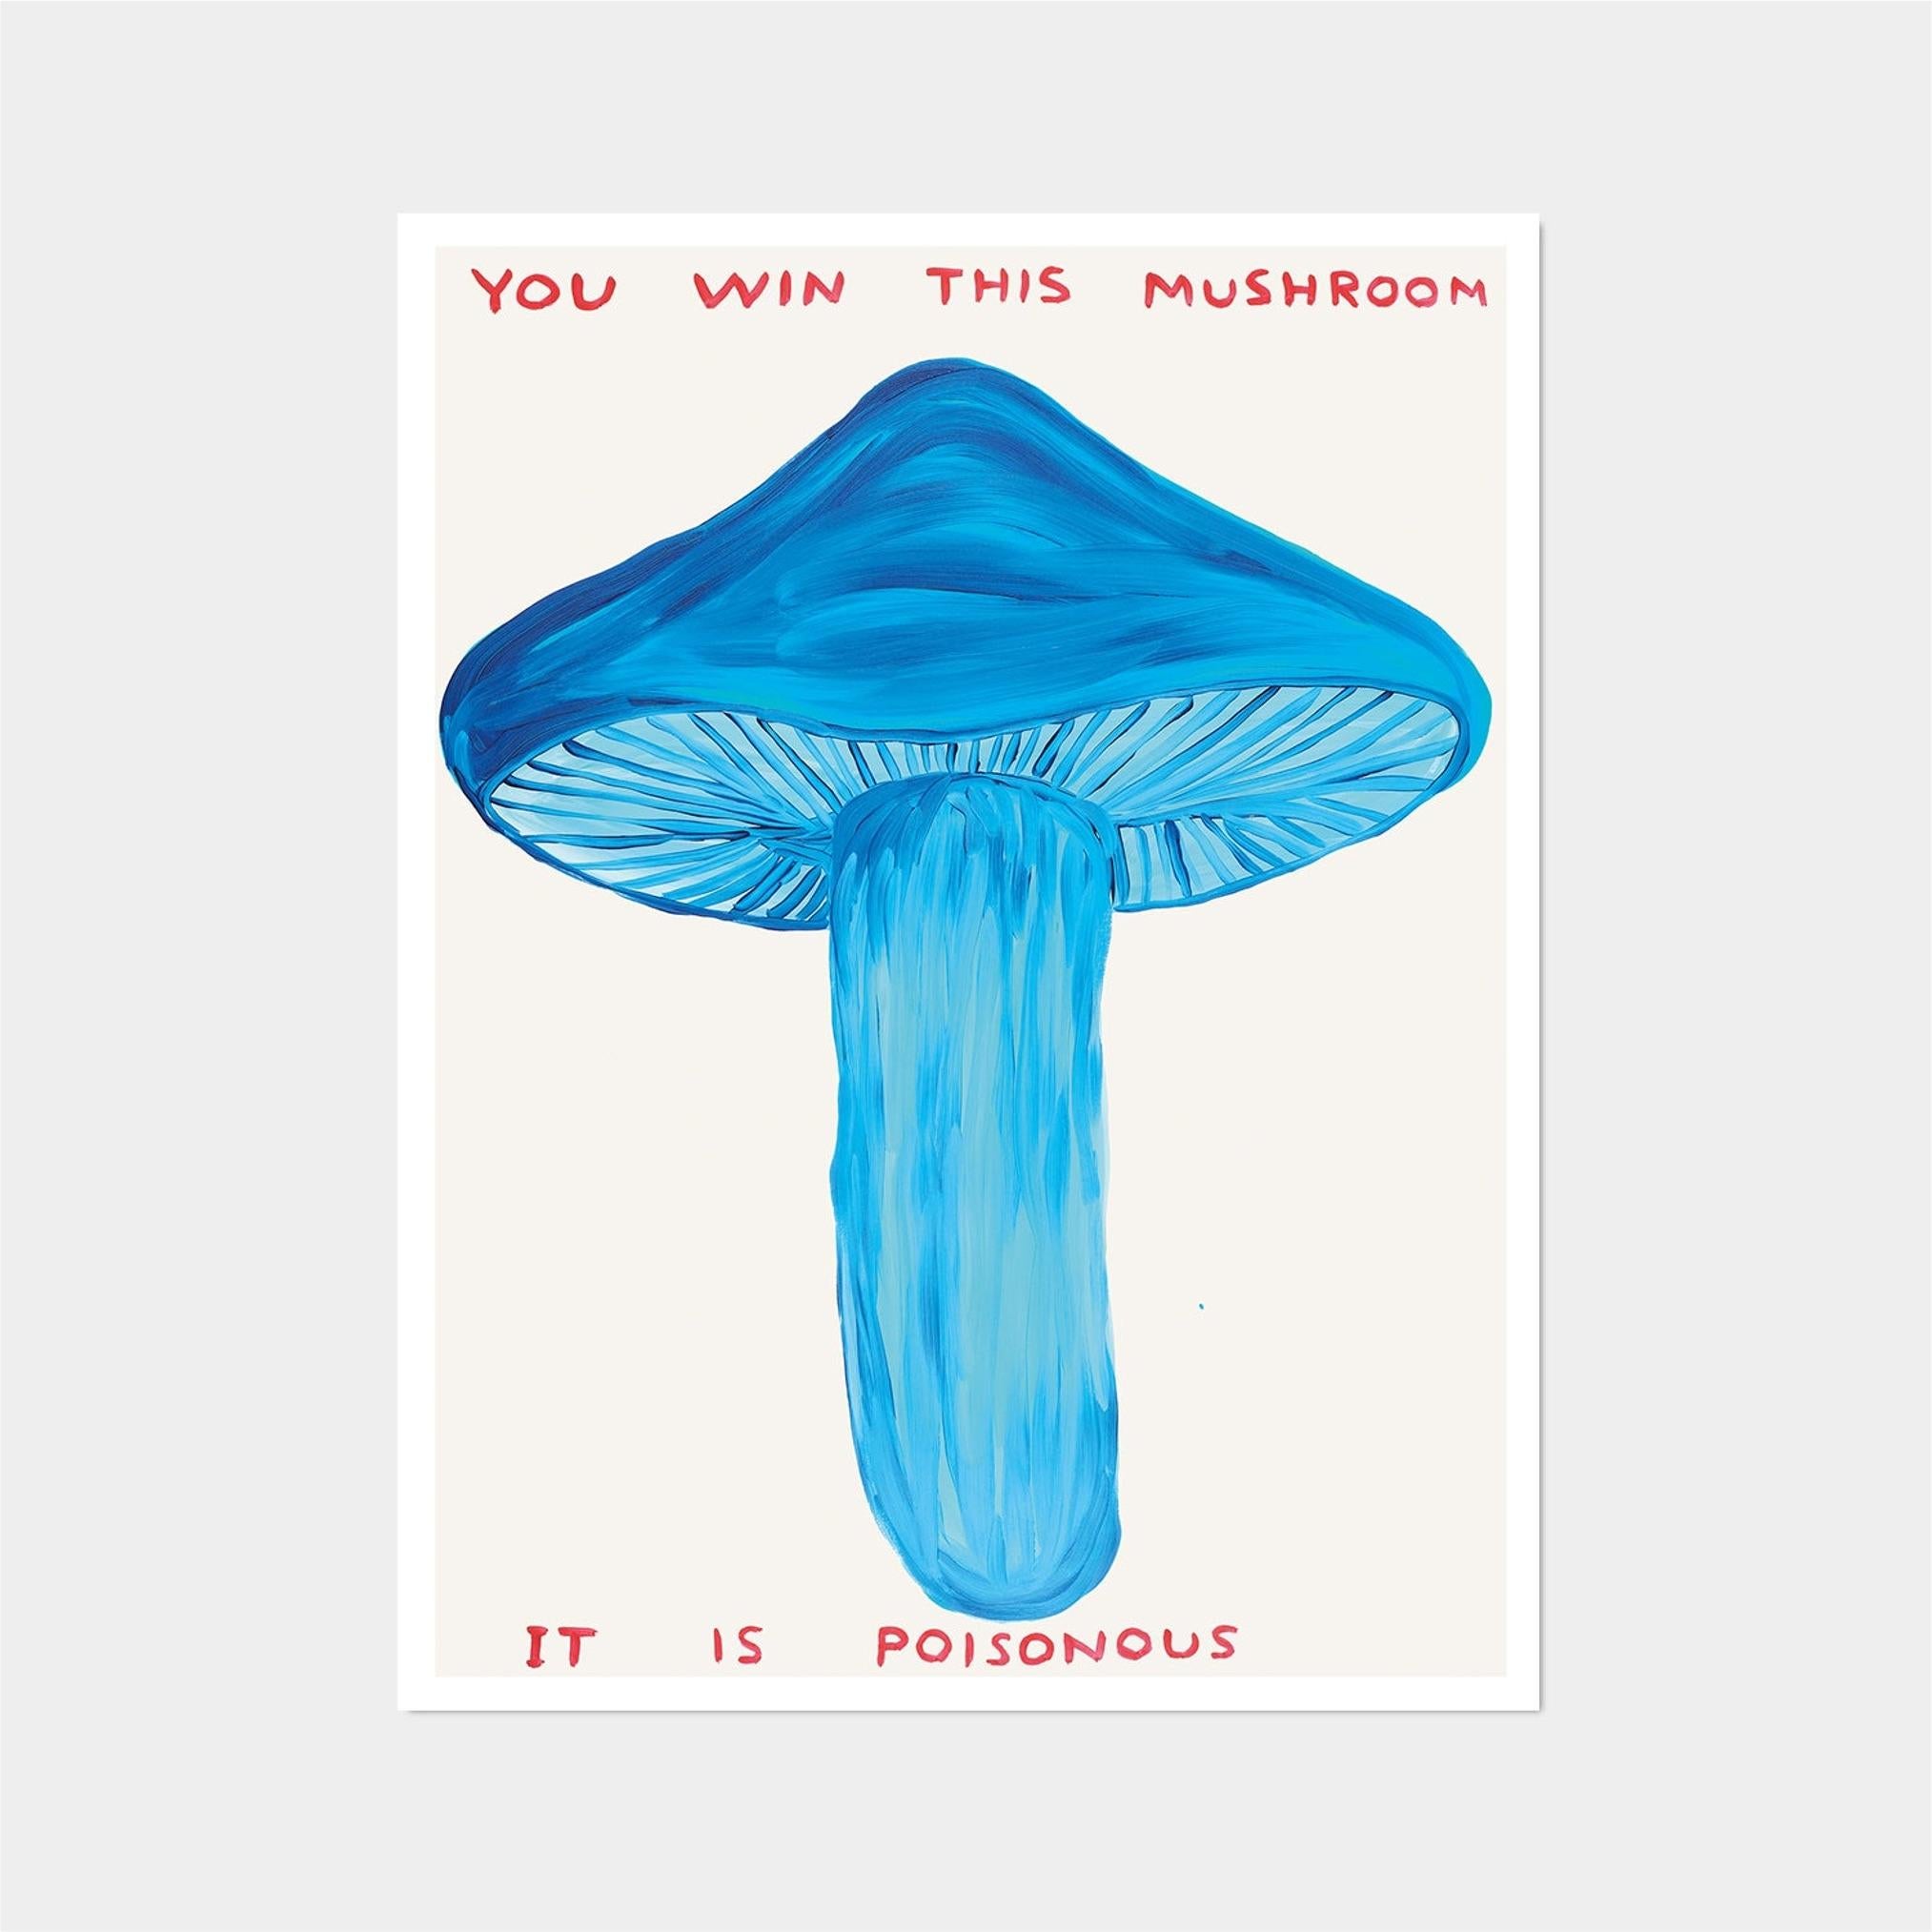 David Shrigley
You Win This Mushroom, 2020
80 x 60 cm
Off-set lithography
Printed on 200g Munken Lynx paper